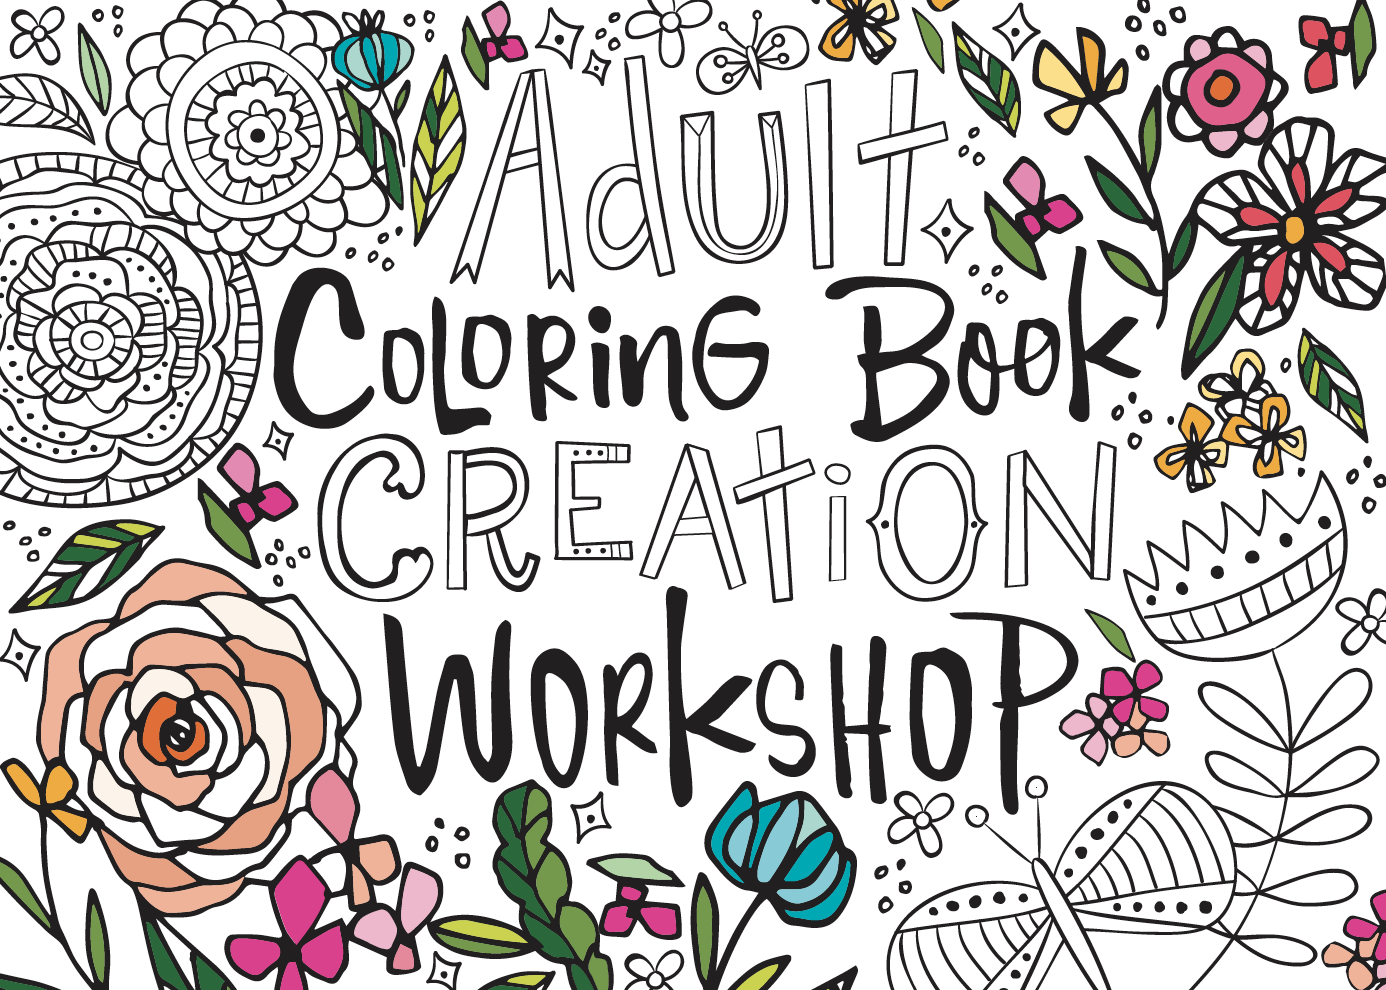 Adult Coloring Book Creation Workshop